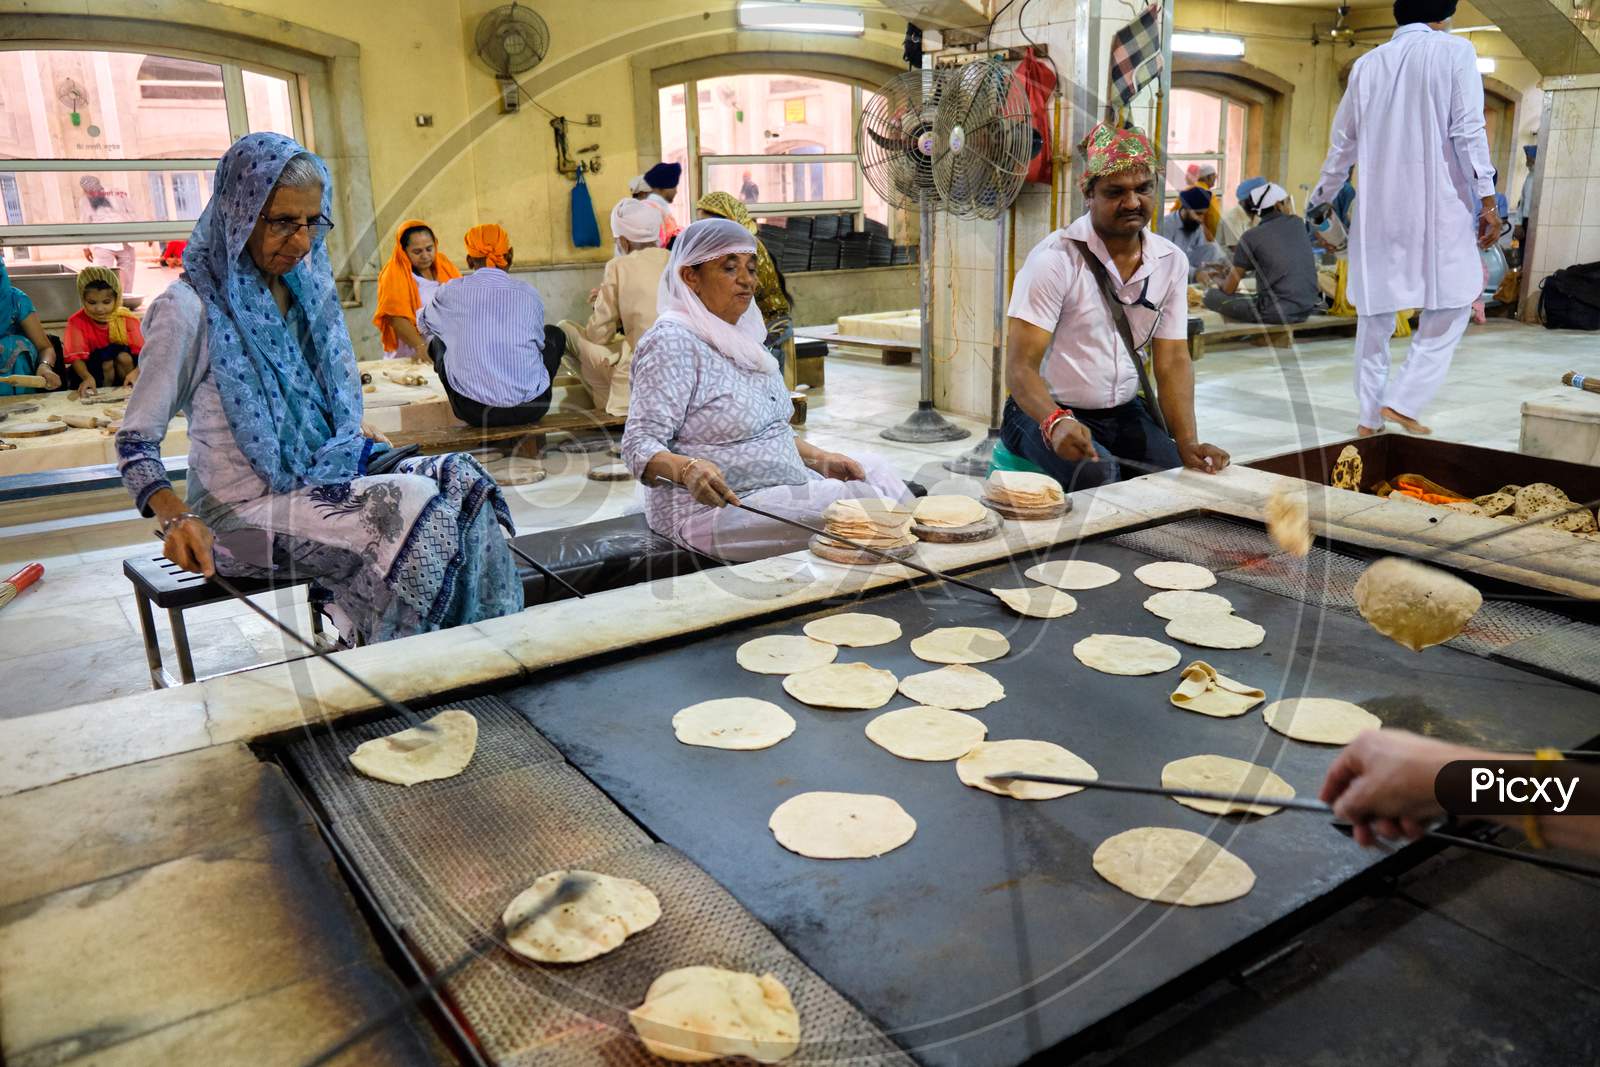 Volunteers Preparing Free Food For Visitors In The Gurdwara Community Kitchen (Langar Hall) Of Sri Bangla Sahib Gurudwara Sikh Temple, New Delhi, India